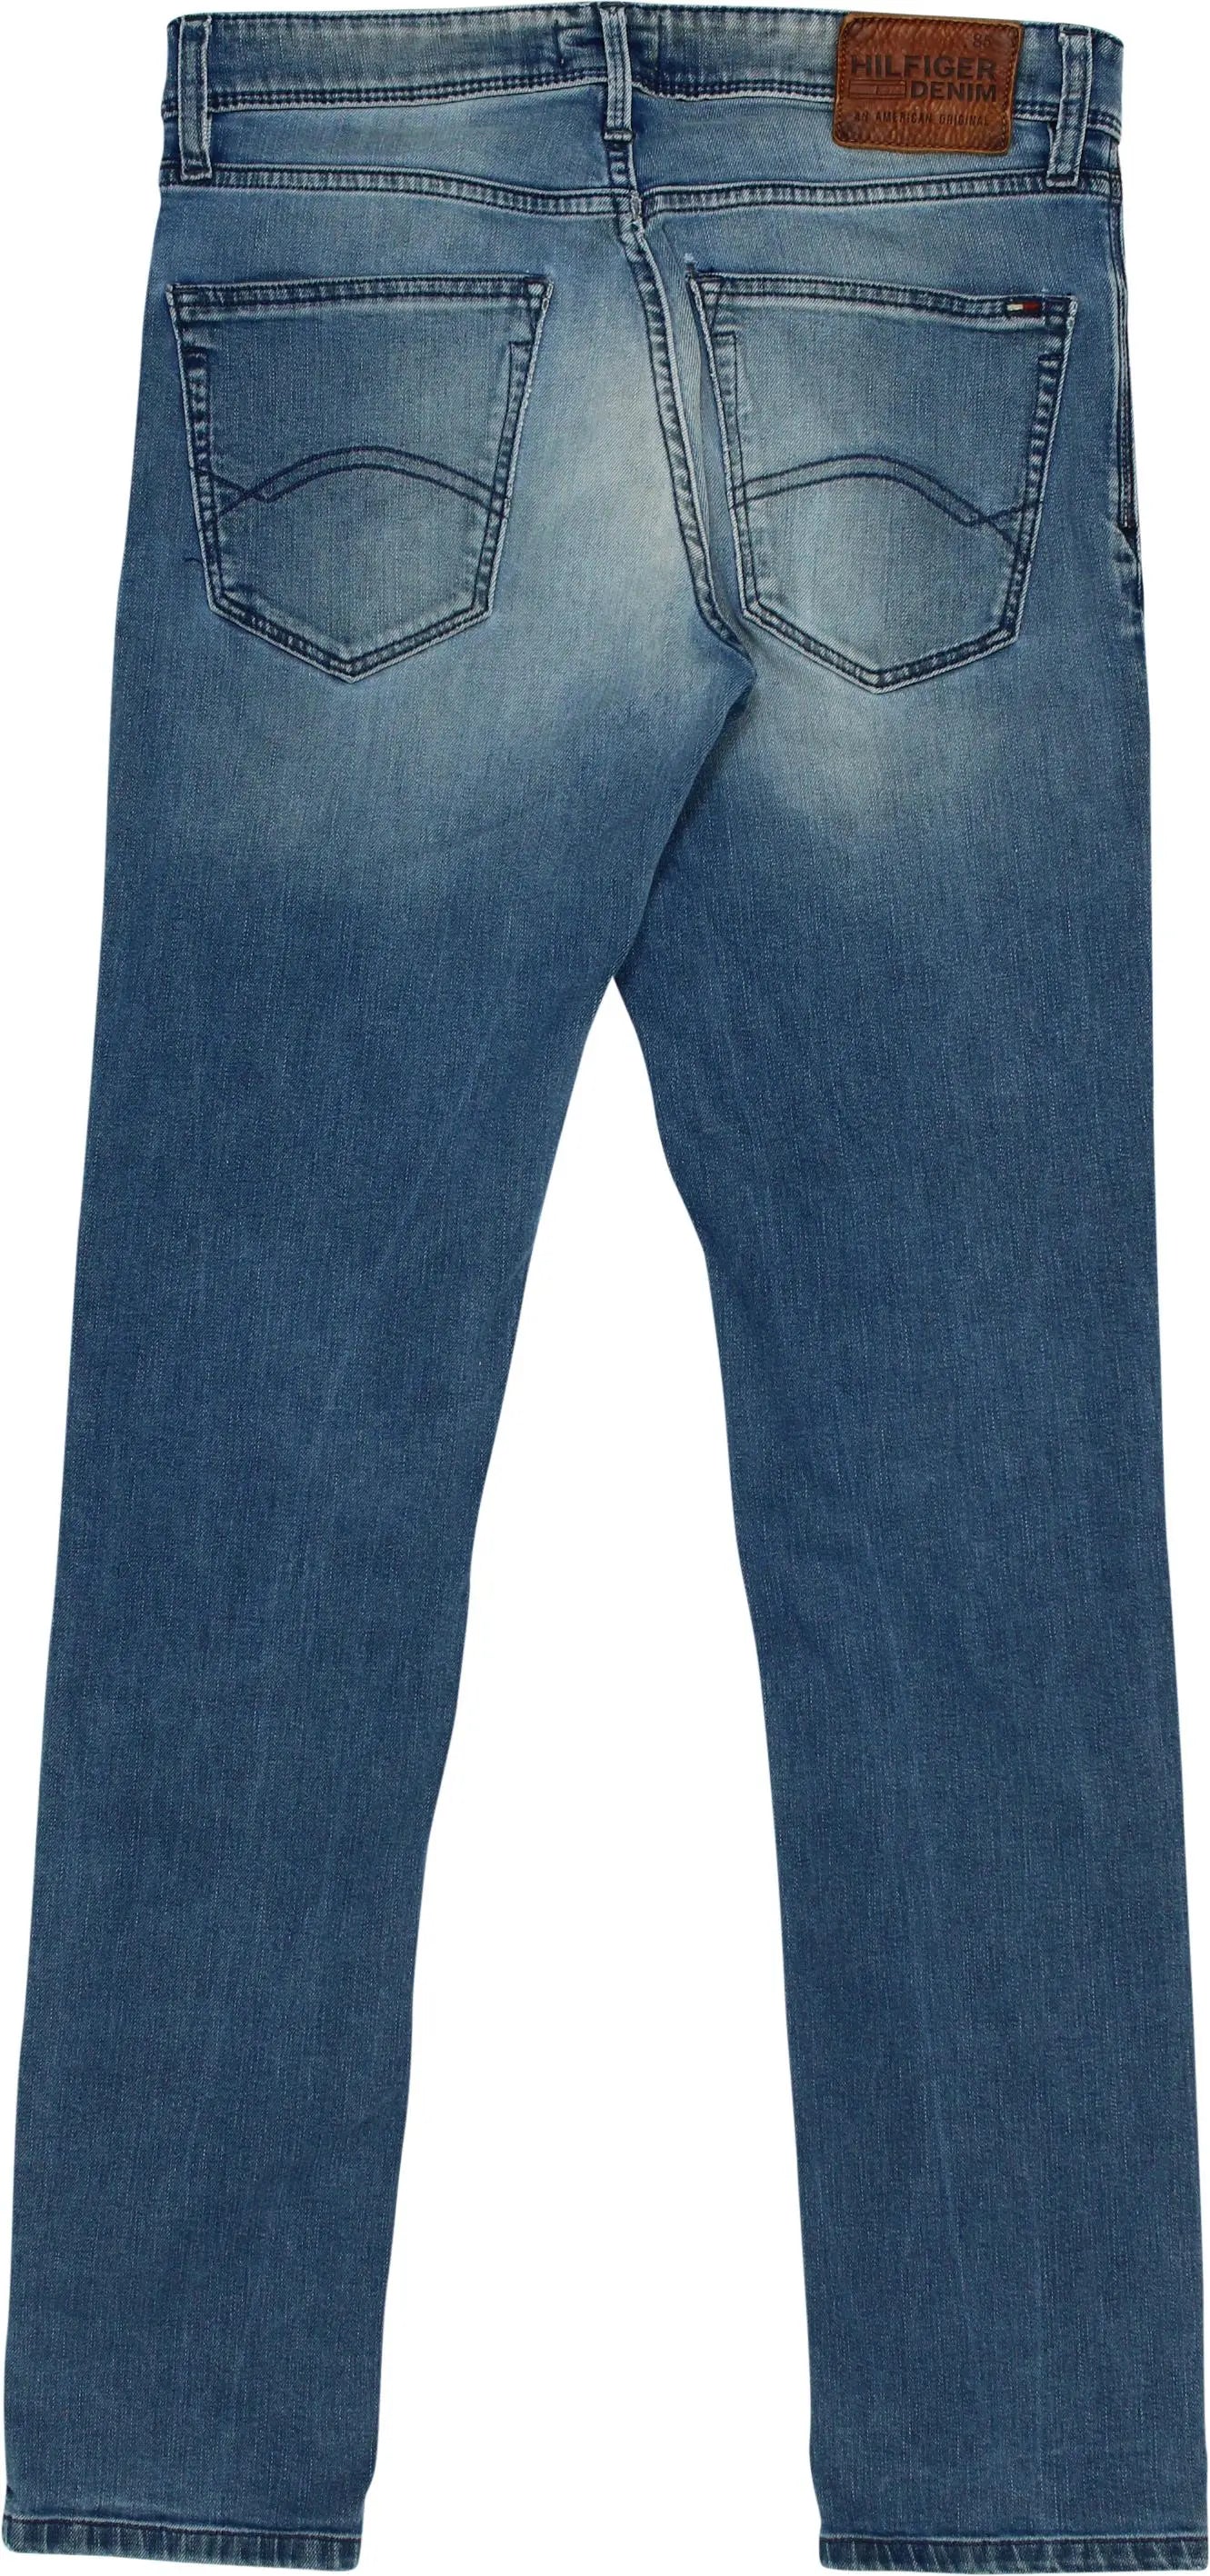 Tommy Hilfiger - Tommy Hilfiger Scanton Skinny Fit Jeans- ThriftTale.com - Vintage and second handclothing